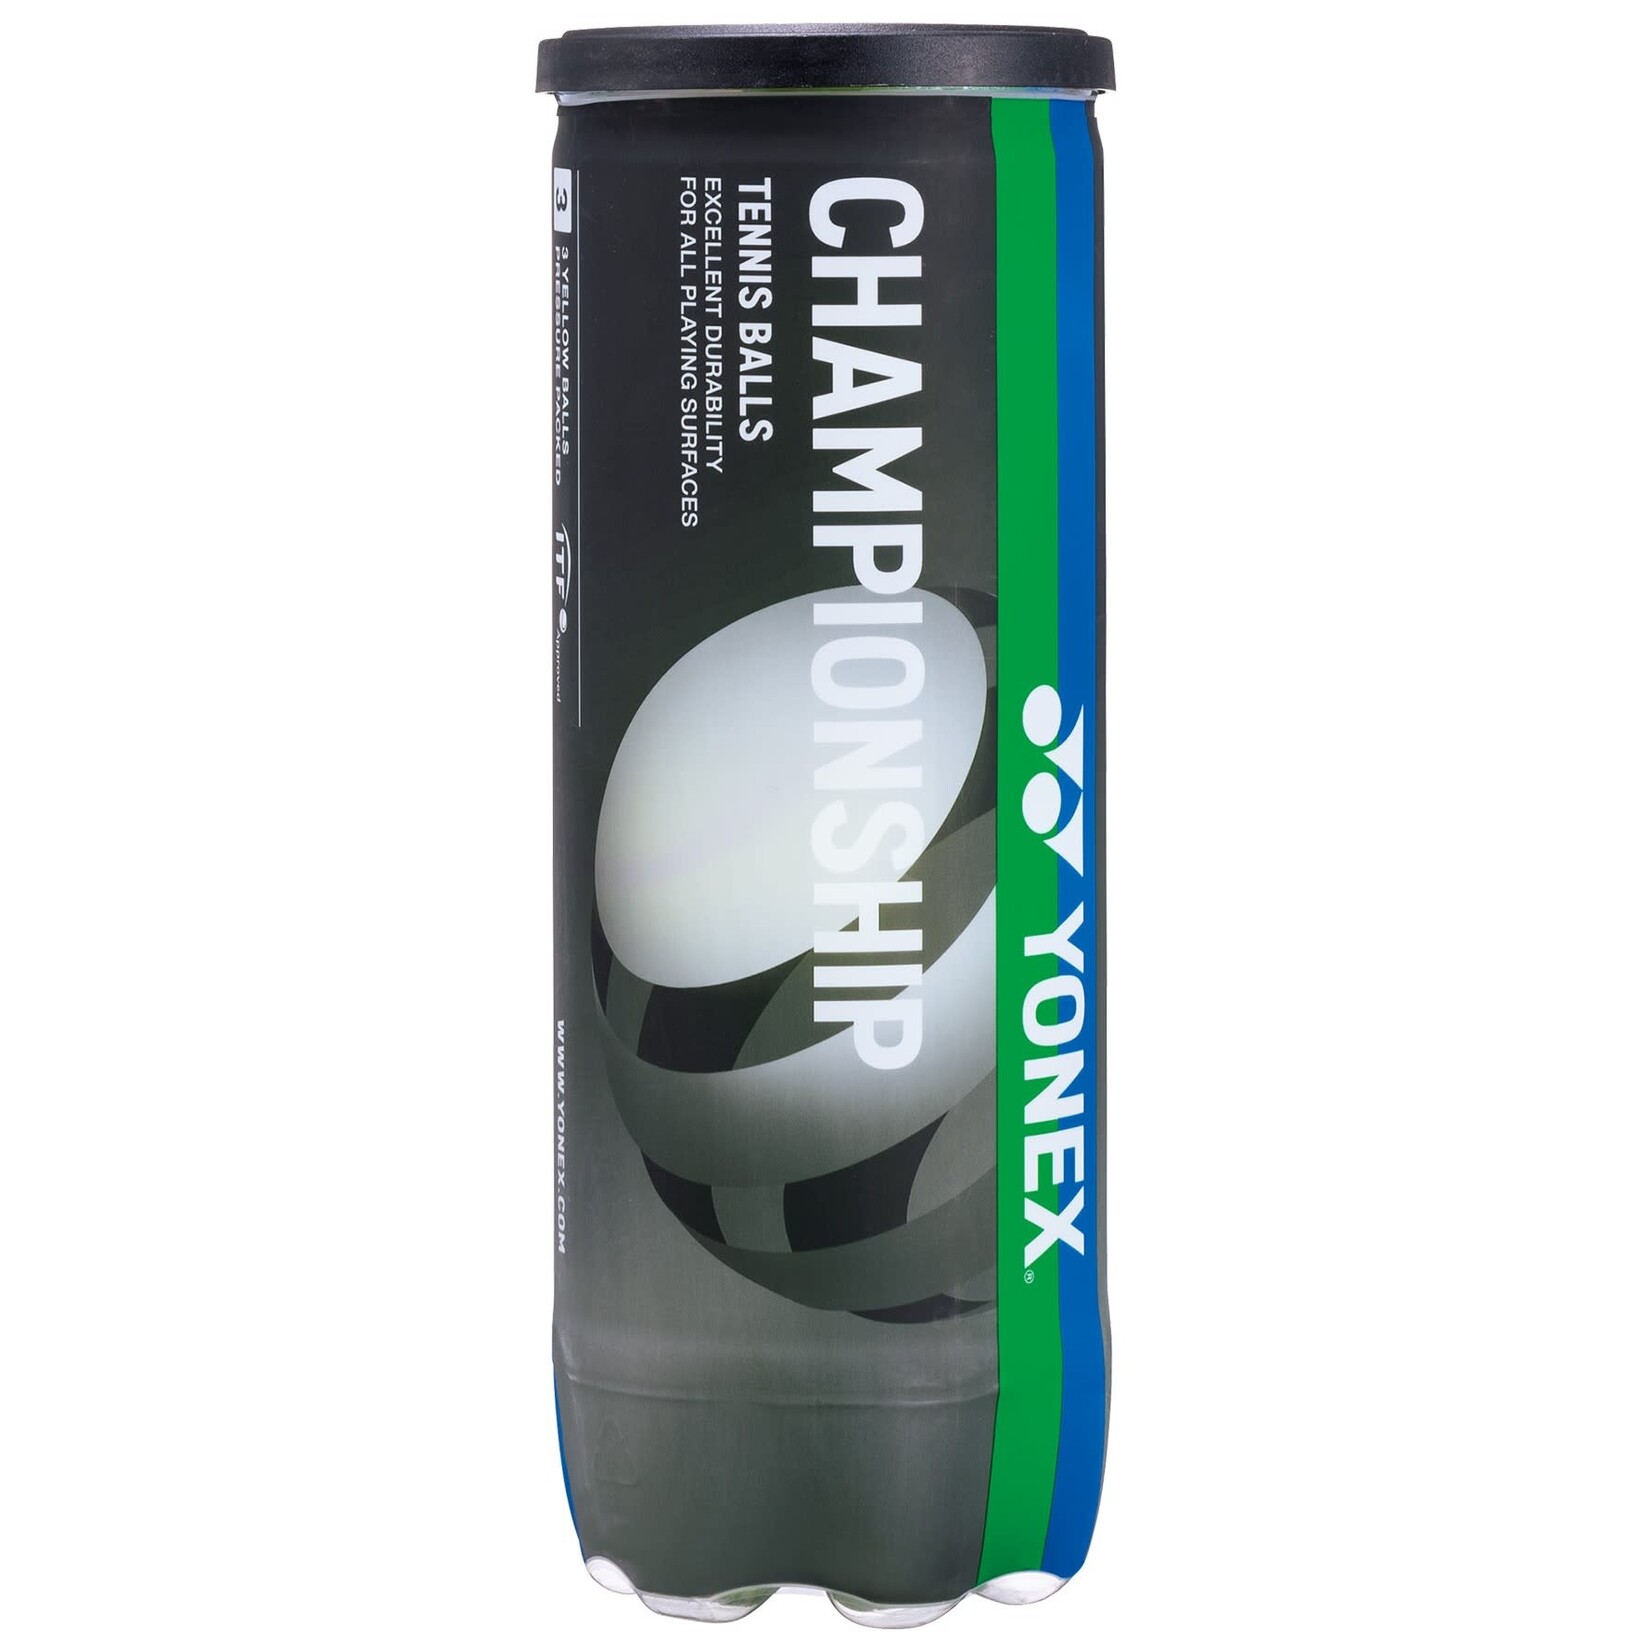 Champion Sports Tennis Balls (3 Pack), (Model: TB3)